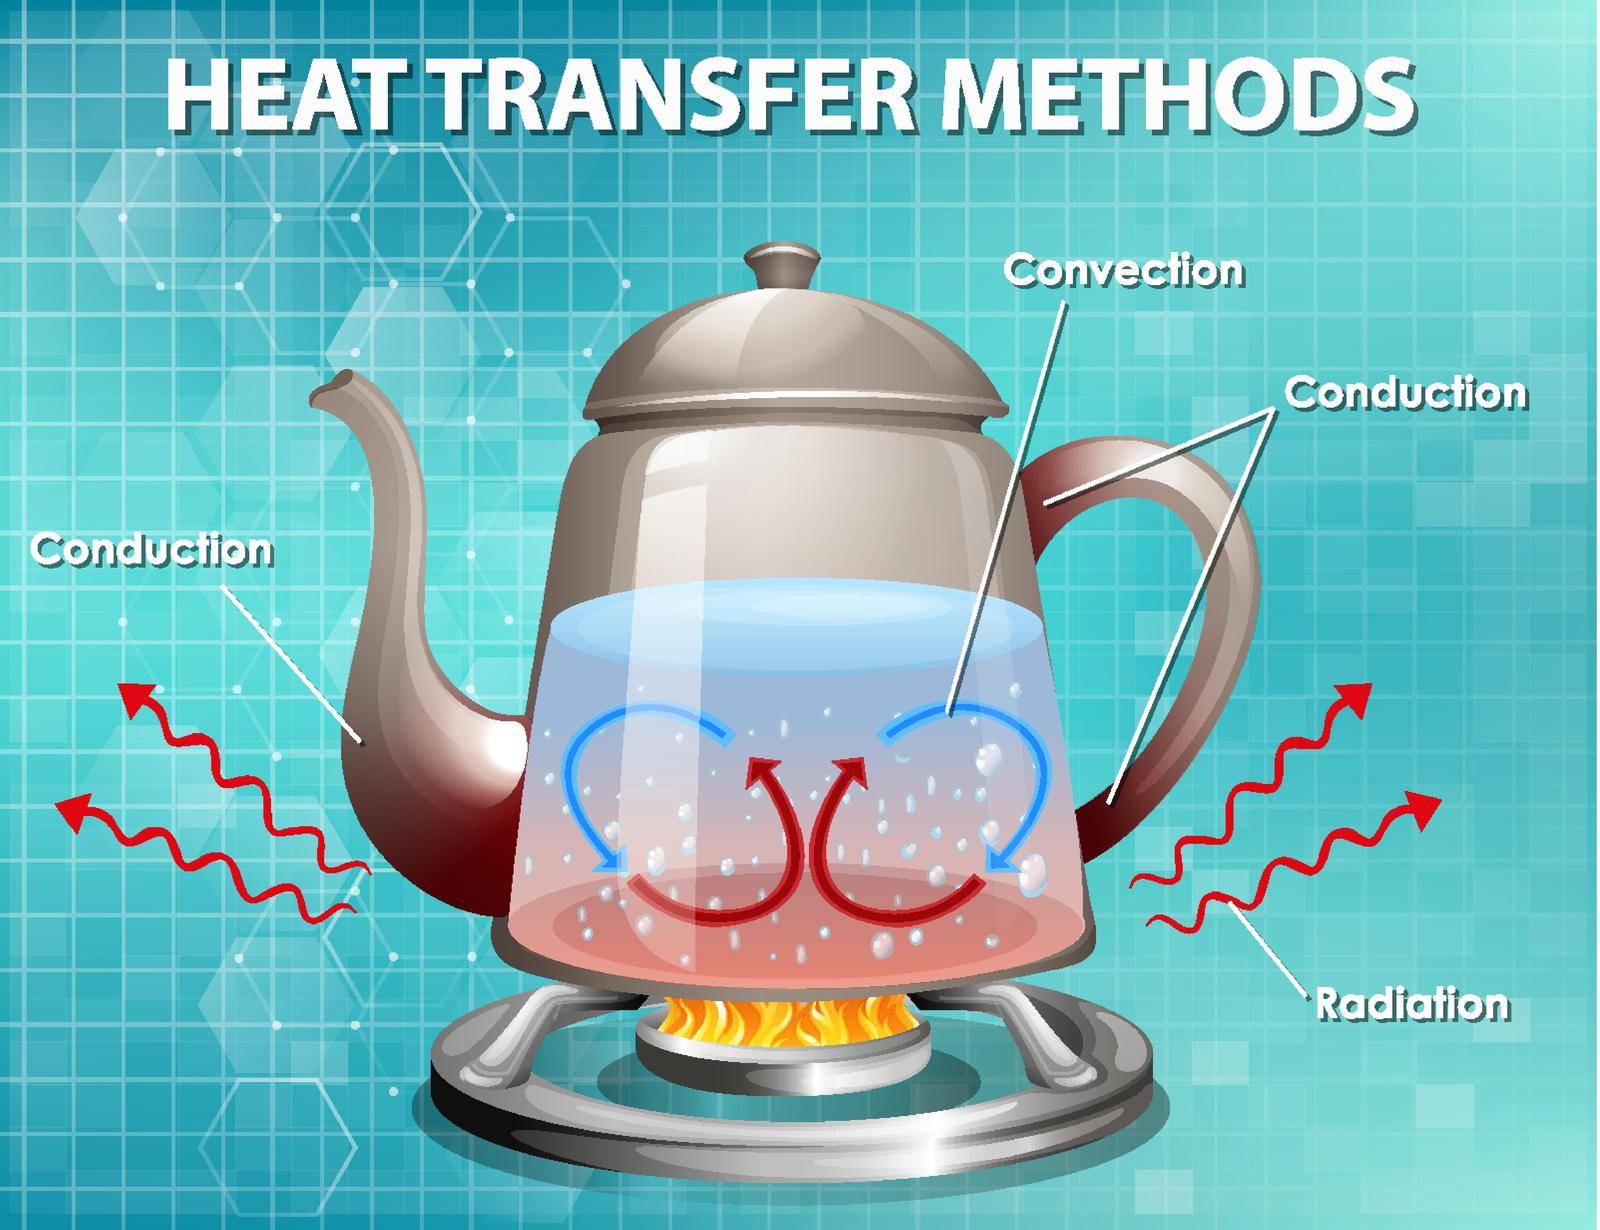 Methods of heat transfer illustration